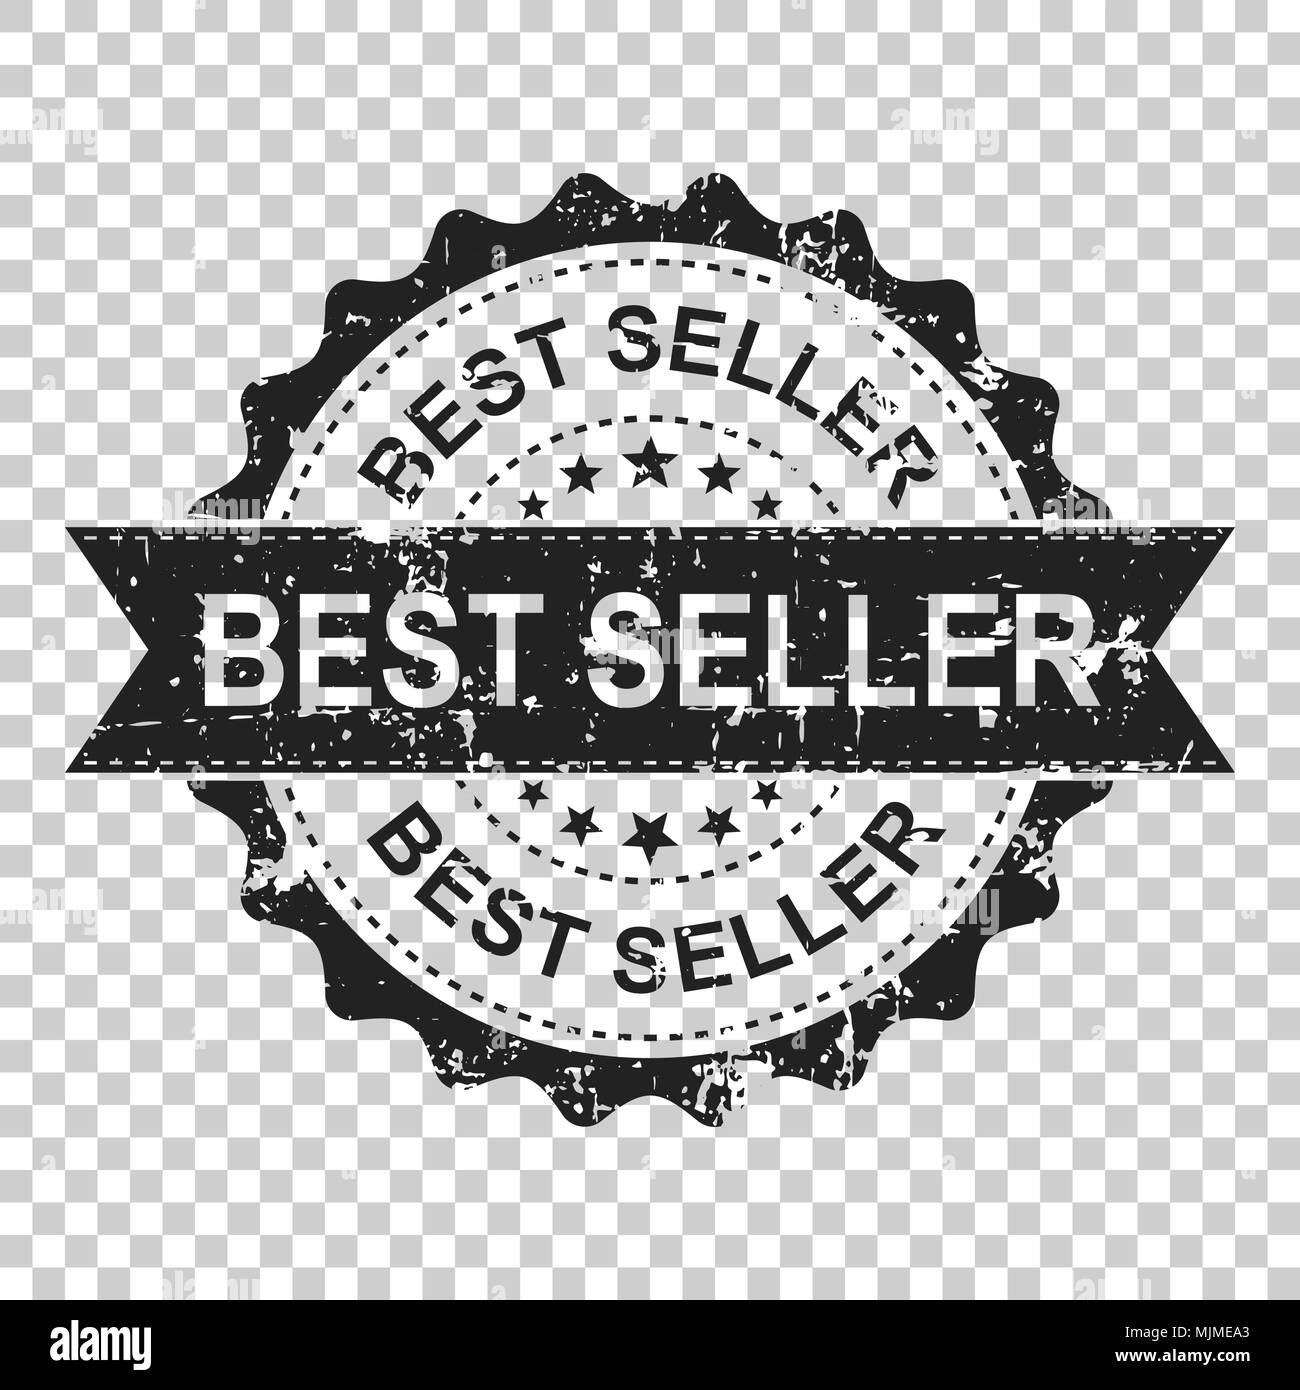 https://c8.alamy.com/comp/MJMEA3/best-seller-scratch-grunge-rubber-stamp-vector-illustration-on-isolated-transparent-background-business-concept-bestseller-stamp-pictogram-MJMEA3.jpg